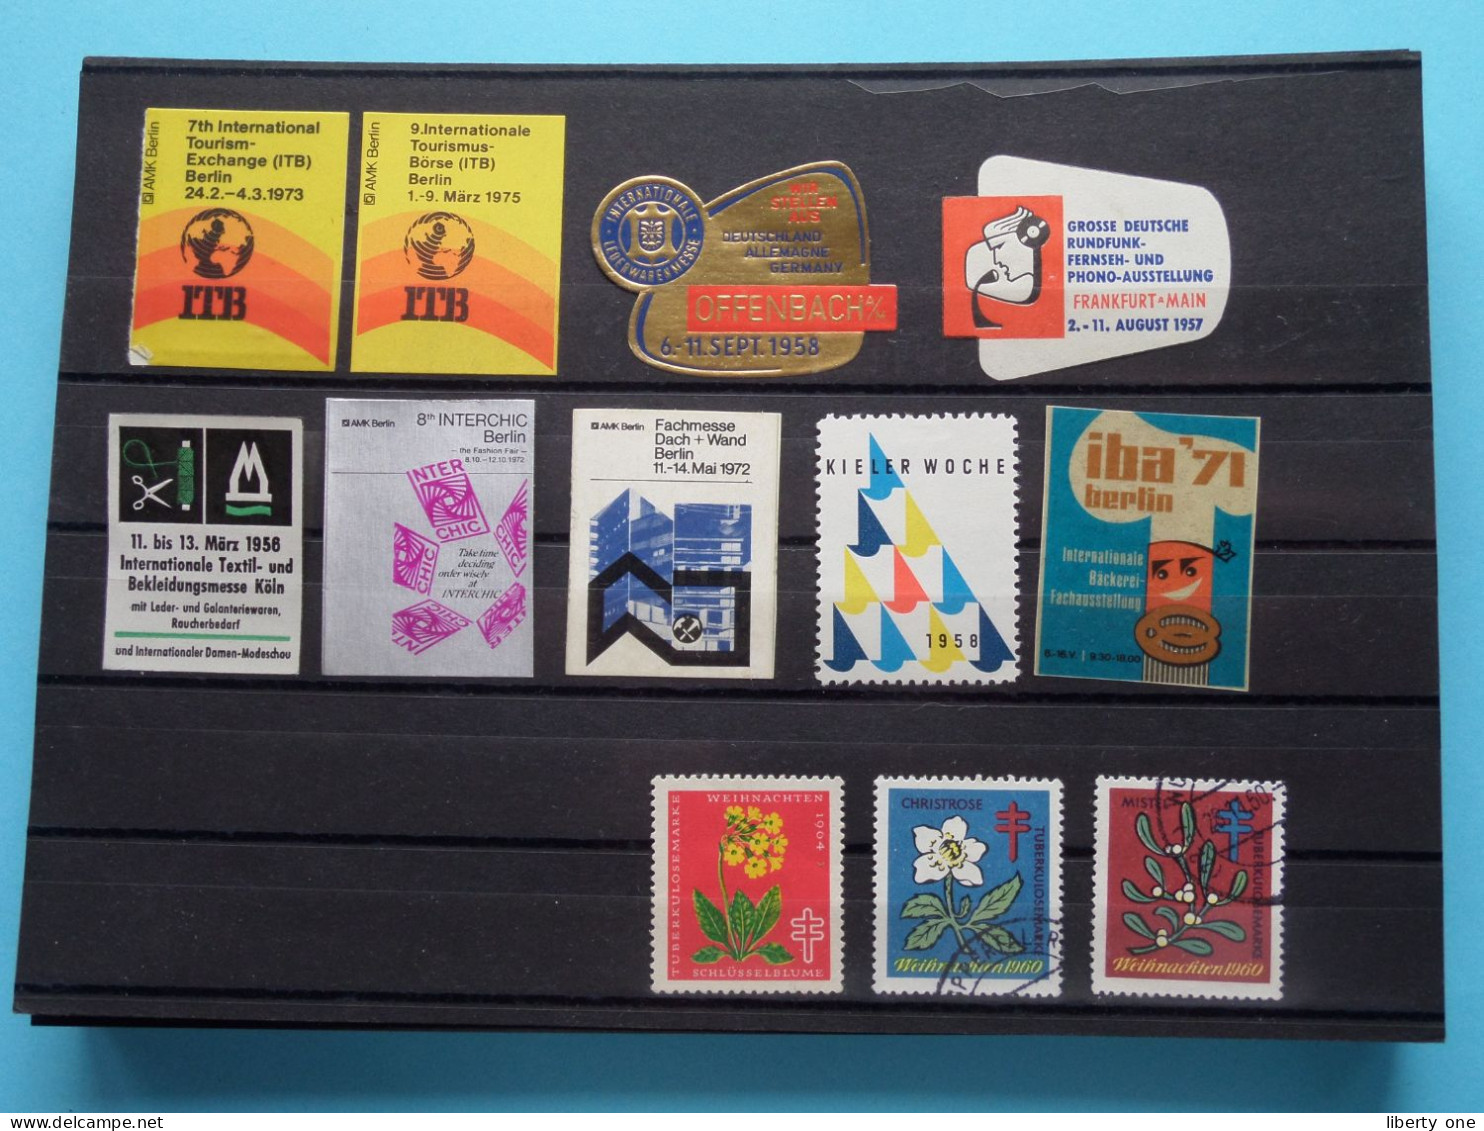 Lotje >> Sluitzegel Timbres-Vignettes Picture Stamp Verschlussmarken ( What You See Is What You Get ) Deutschland ! - Matasellos Generales